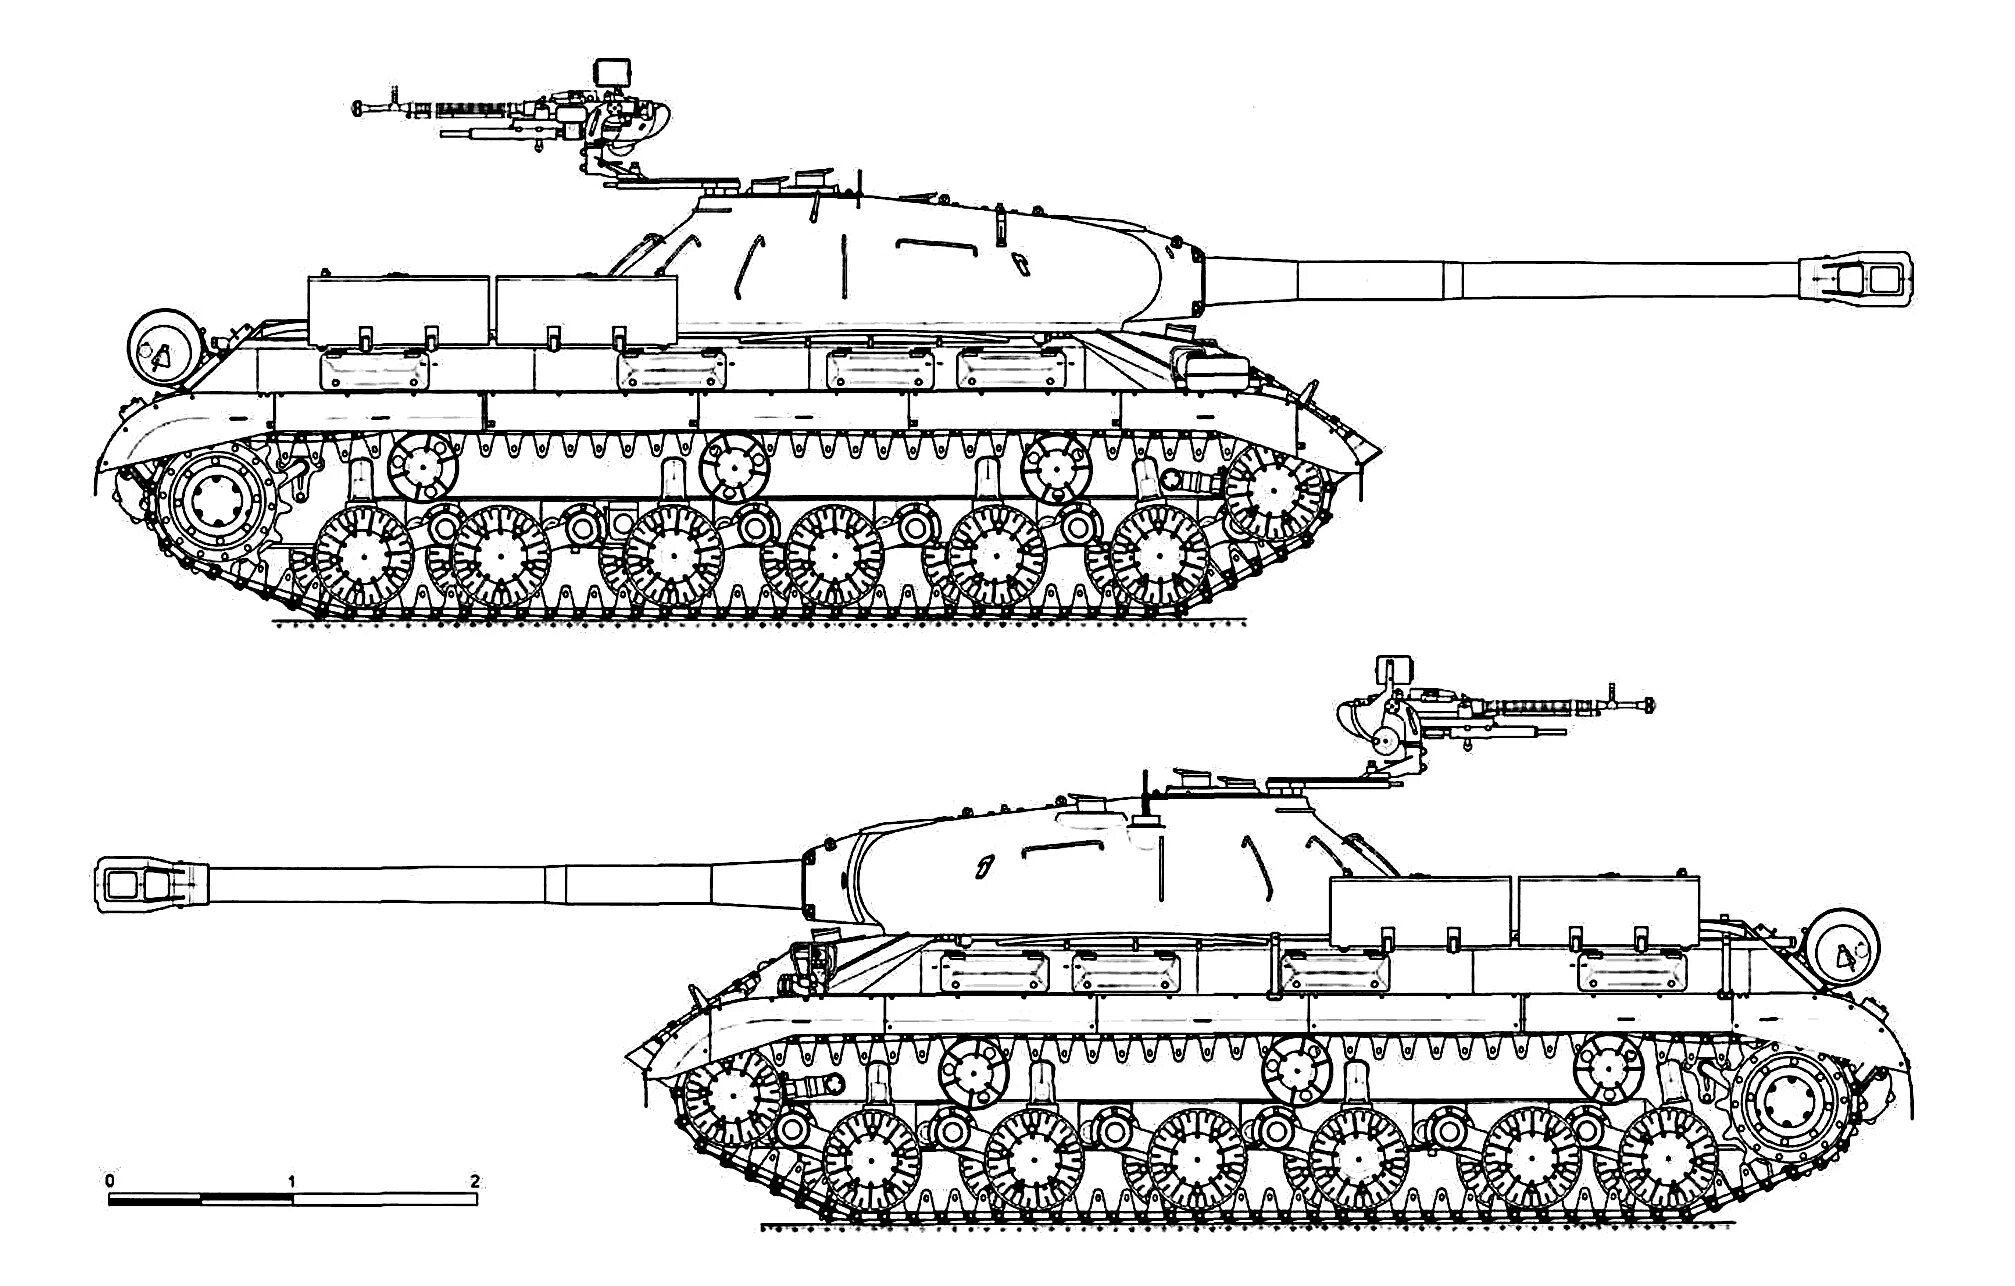 Ис ц. ИС 7 чертеж вид сбоку. Танк ИС 3 сбоку. Рисунок танка ИС 3. Танк ИС 7 вид сбоку.